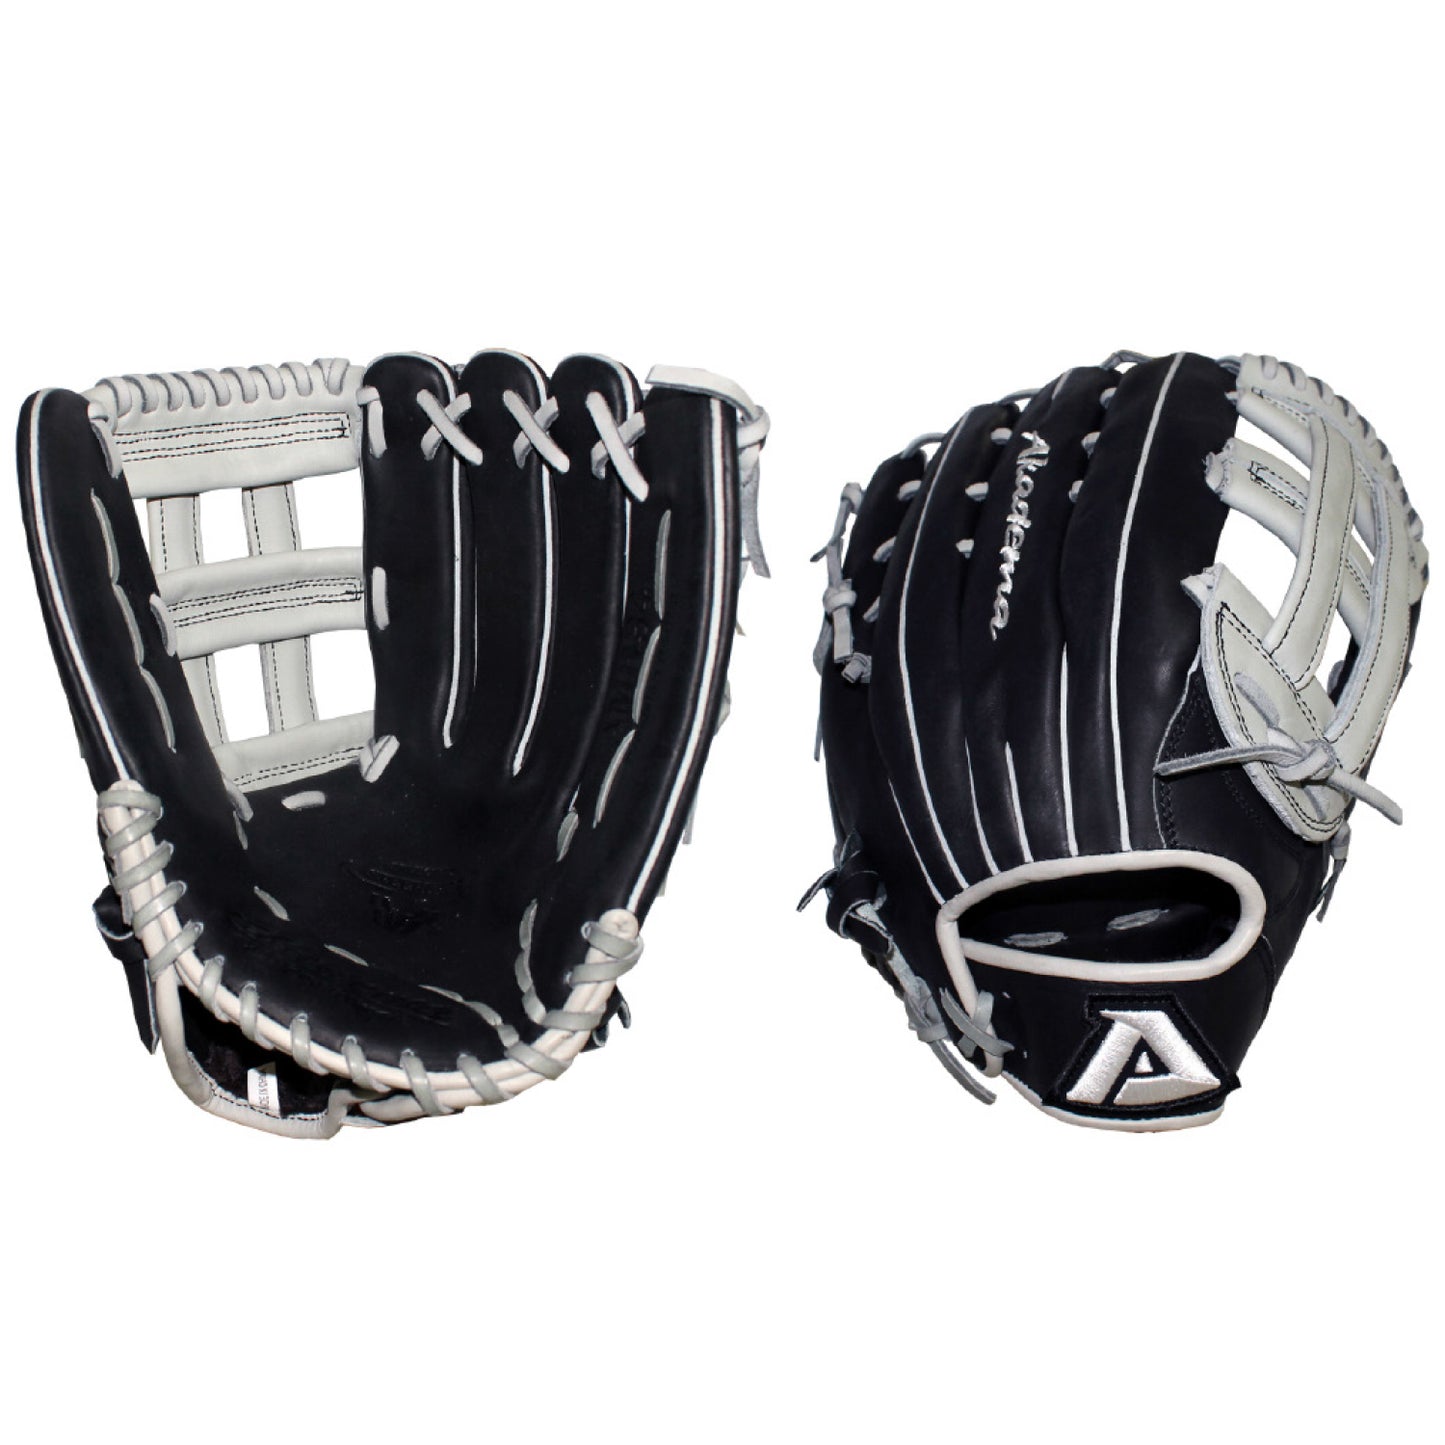 Akadema Precision AMR34 12.75 in Outfield Baseball Glove